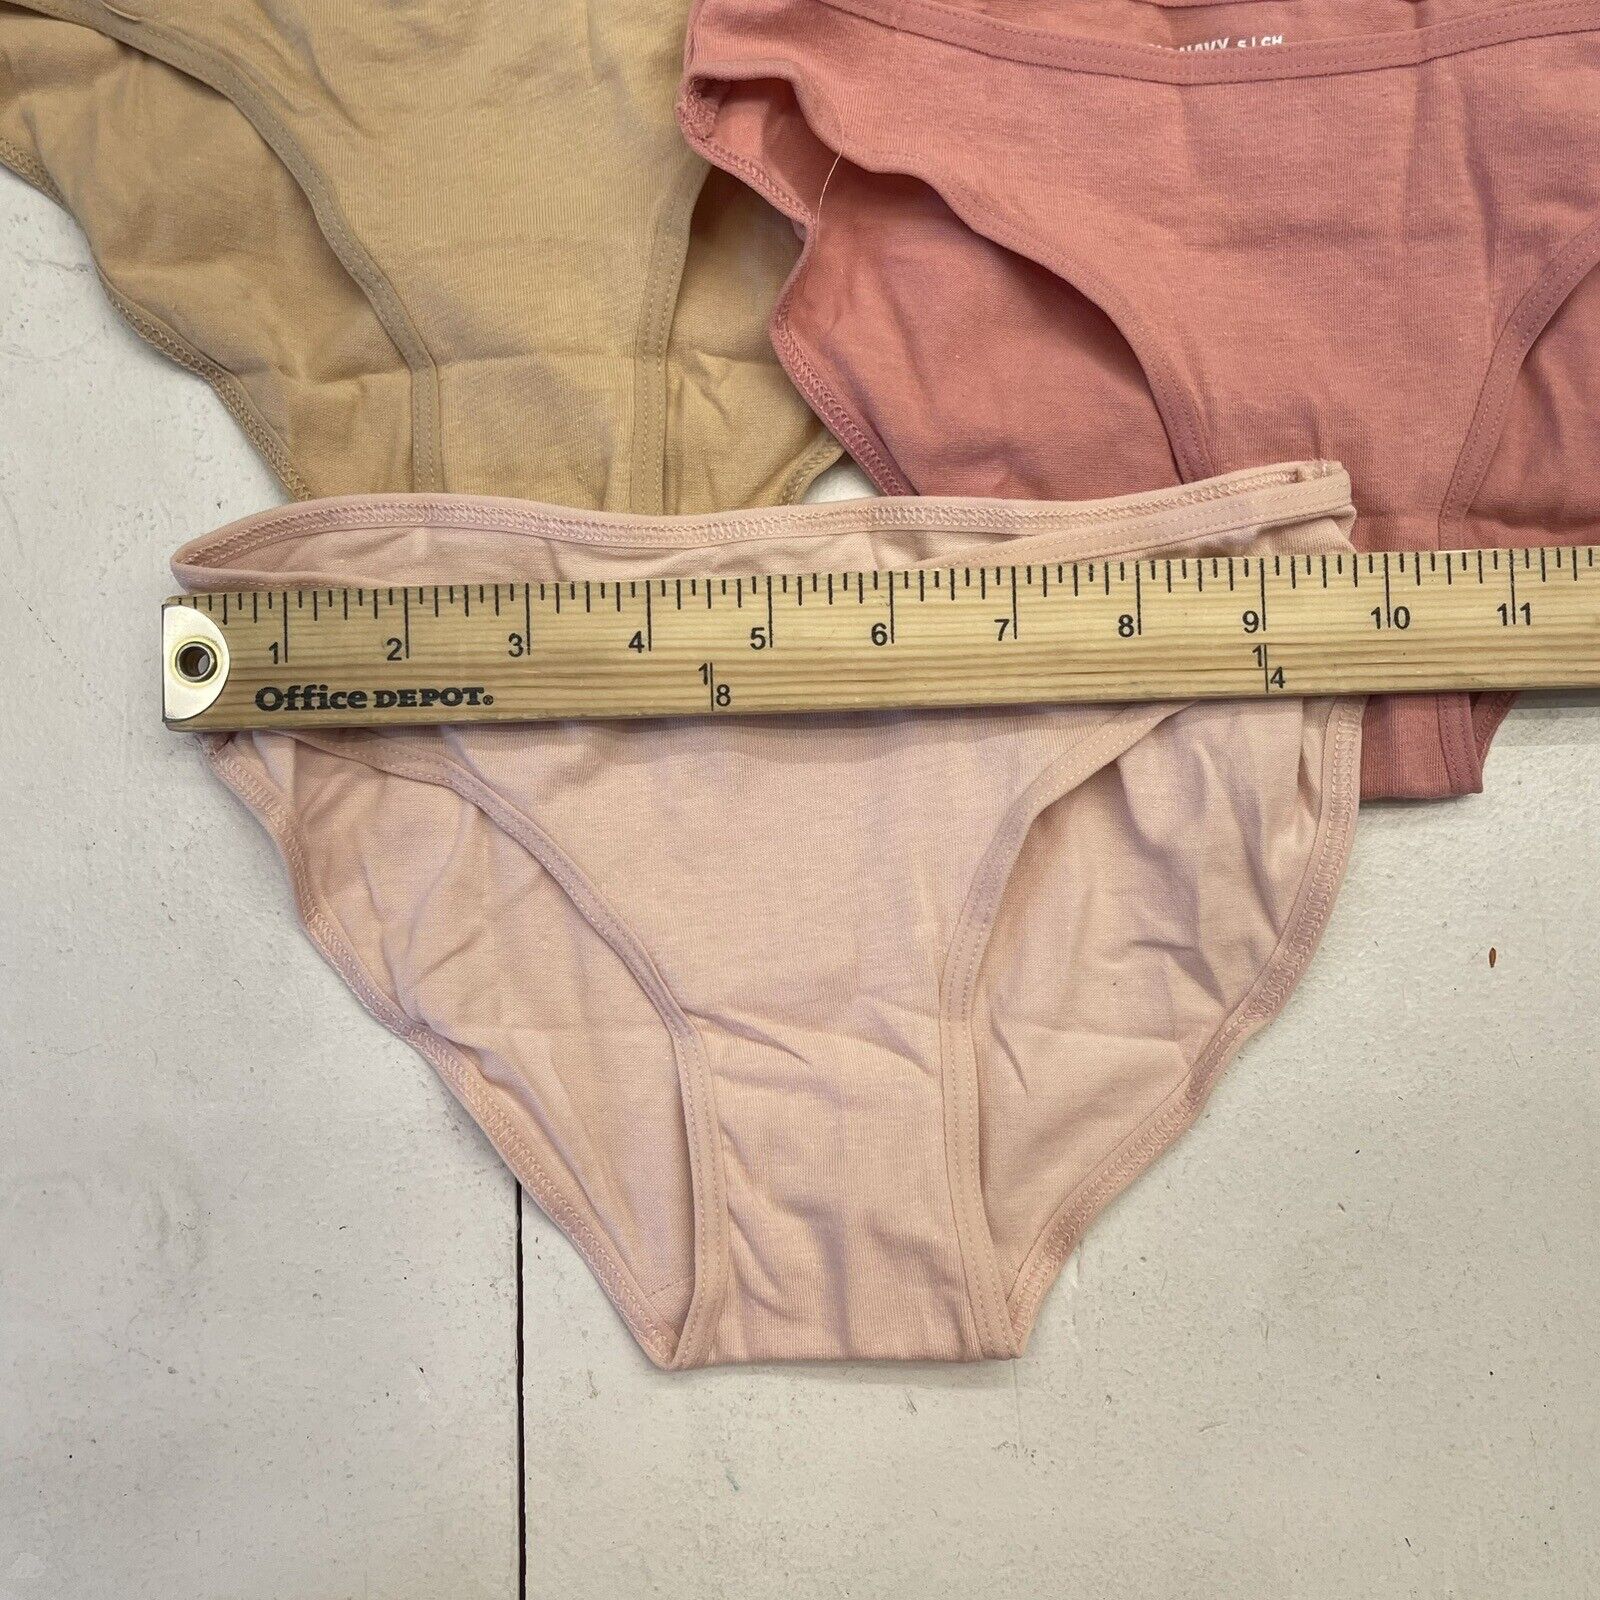 Old Navy Girls 7 Pack Multicolored Bikini Underwear Size Small New